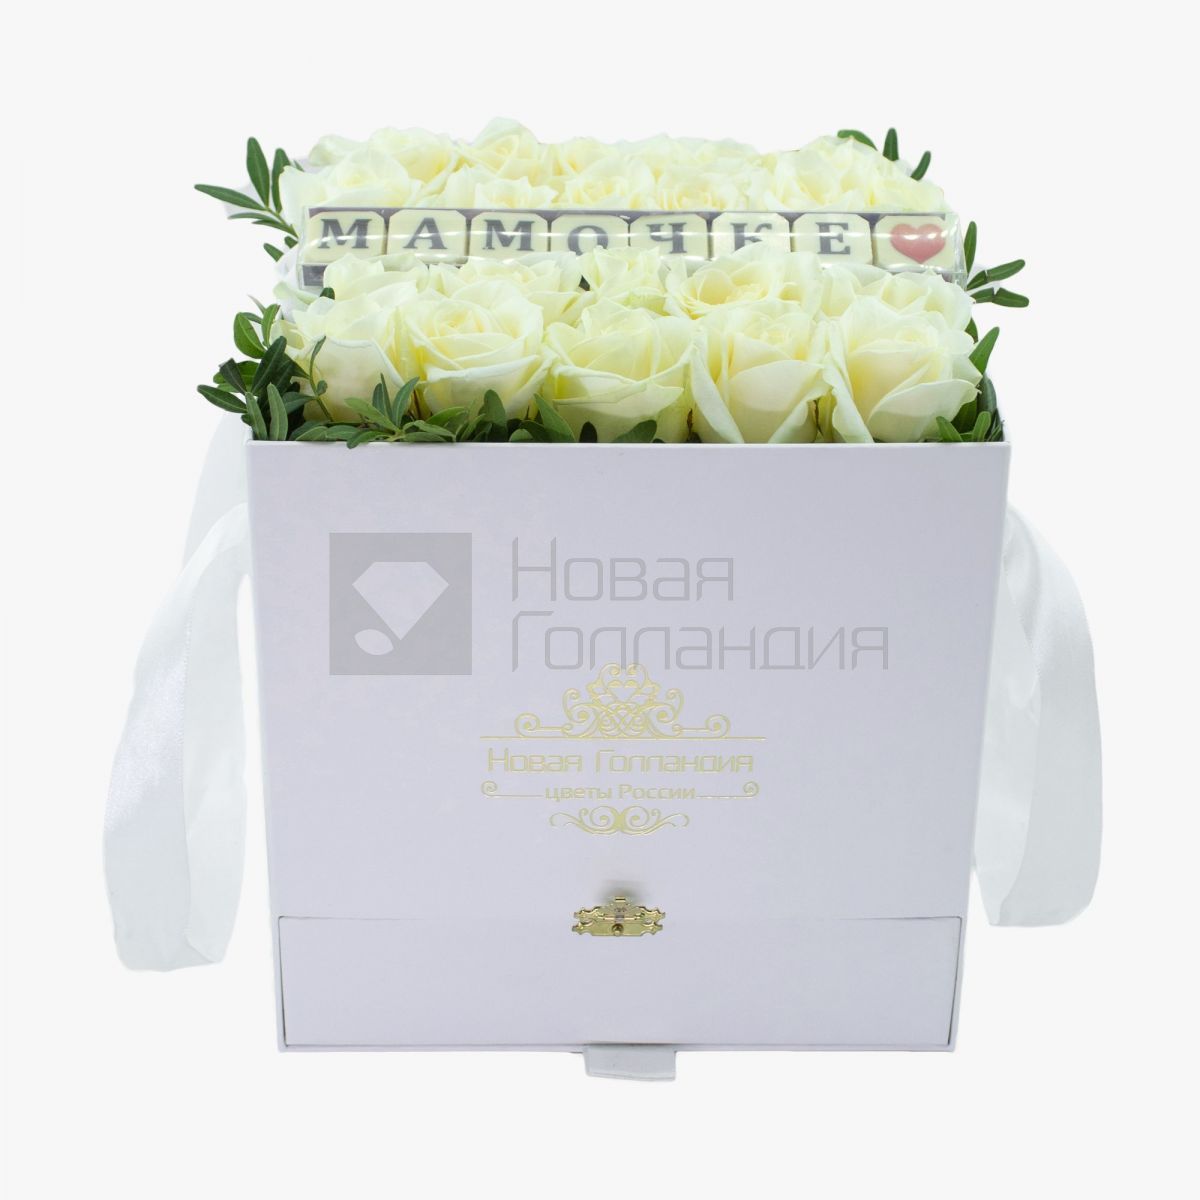 Белая коробка шкатулка из белых роз с шоколадом Мамочке №621